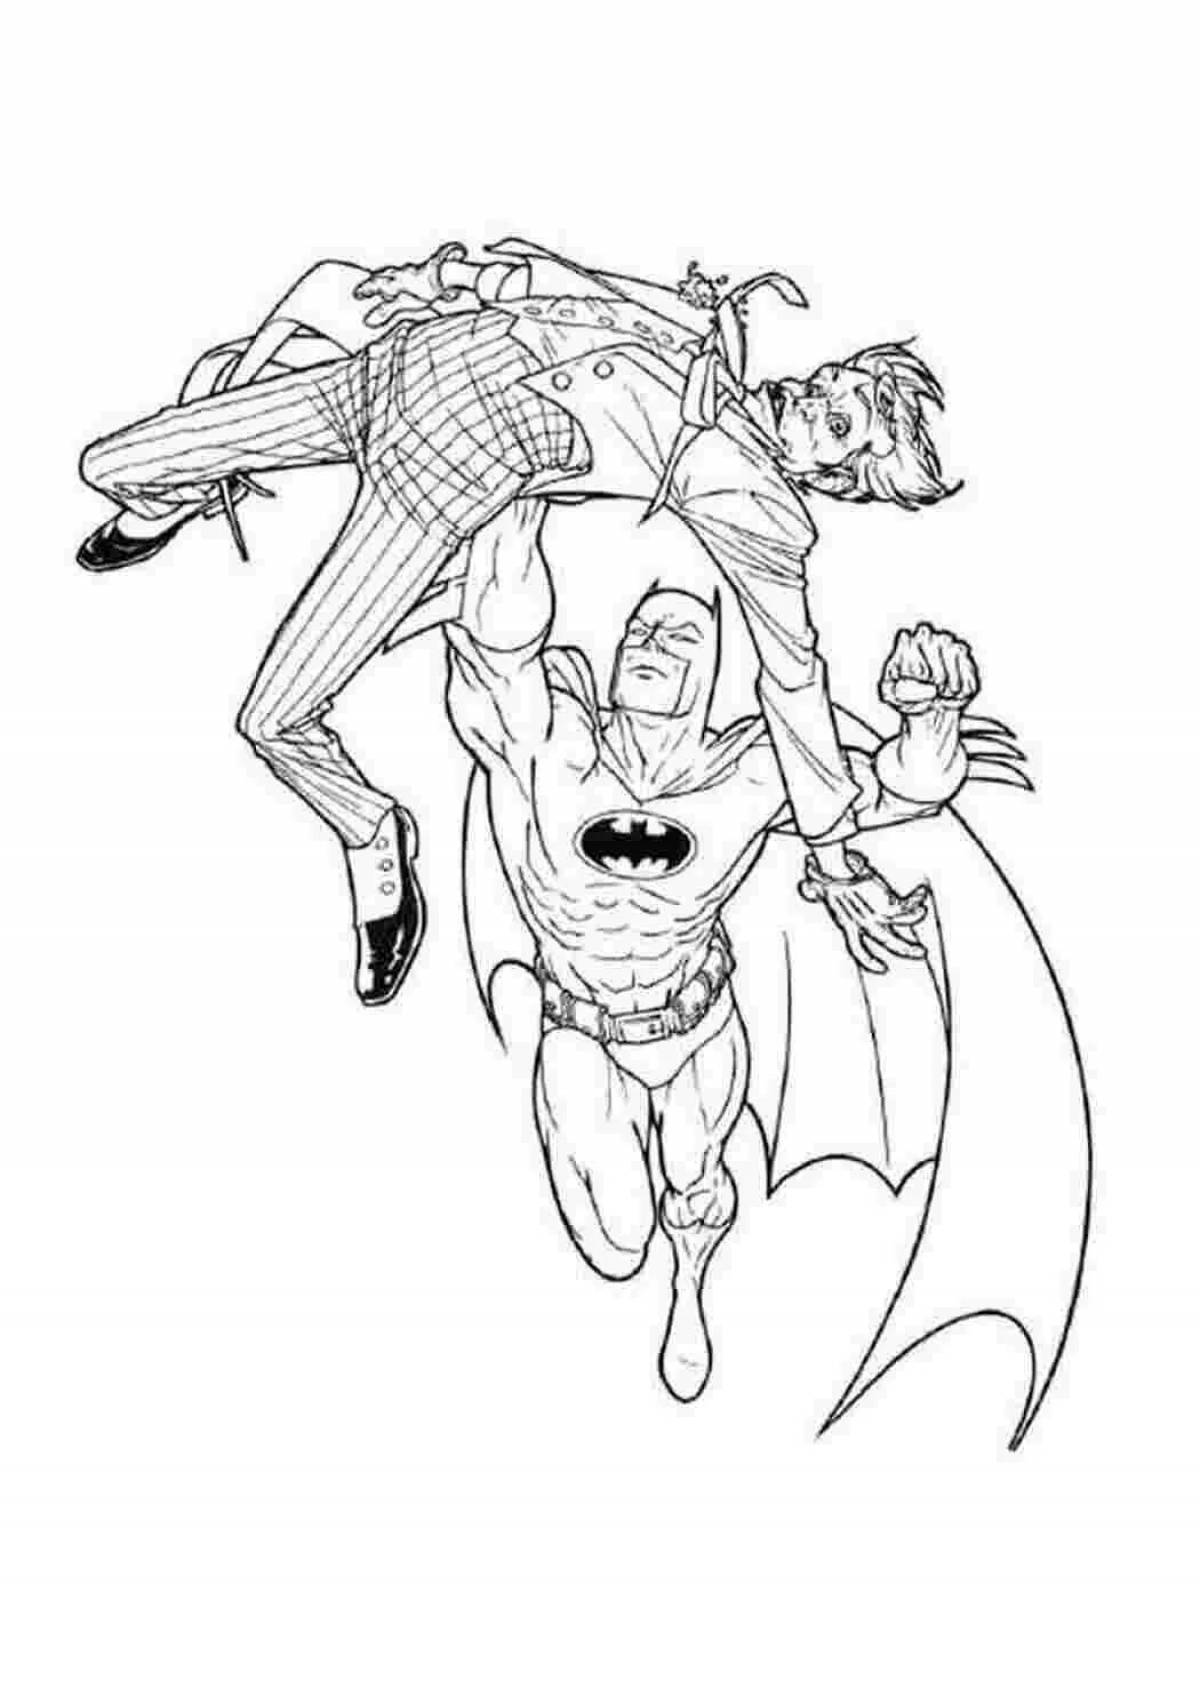 Coloring page nice batman and joker